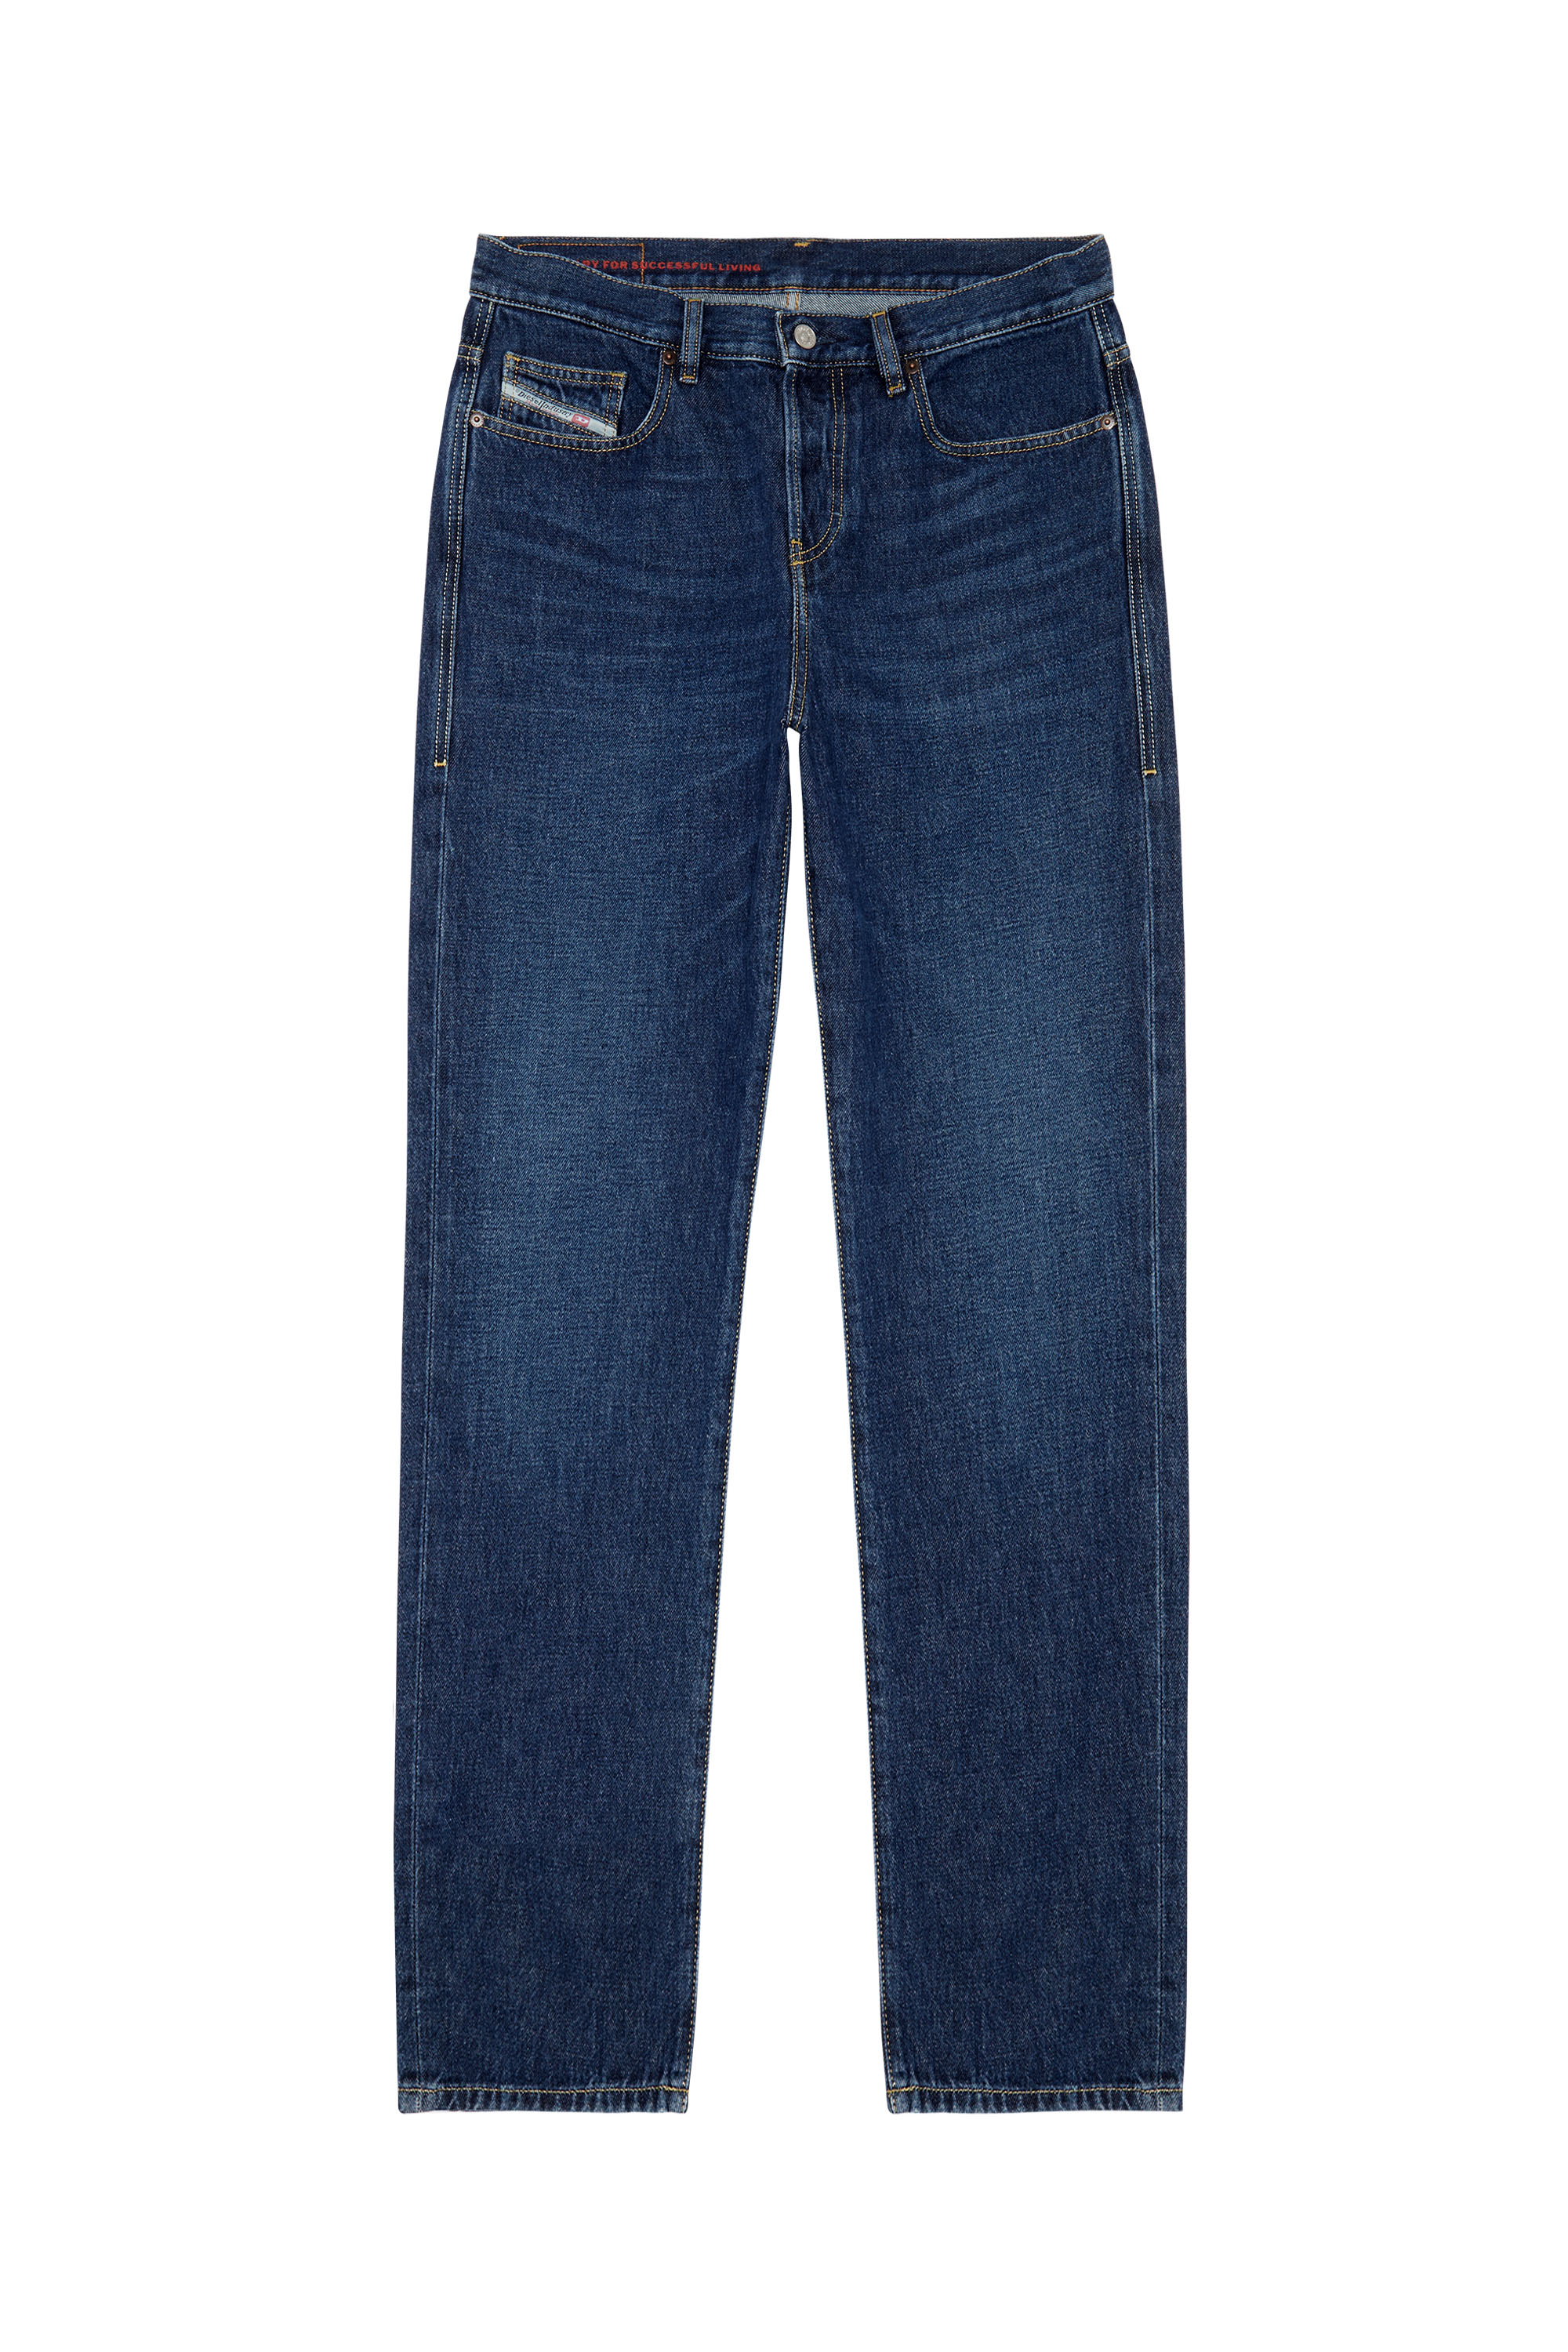 2020 D-Viker 09C03 Straight Jeans, Dark Blue - Jeans